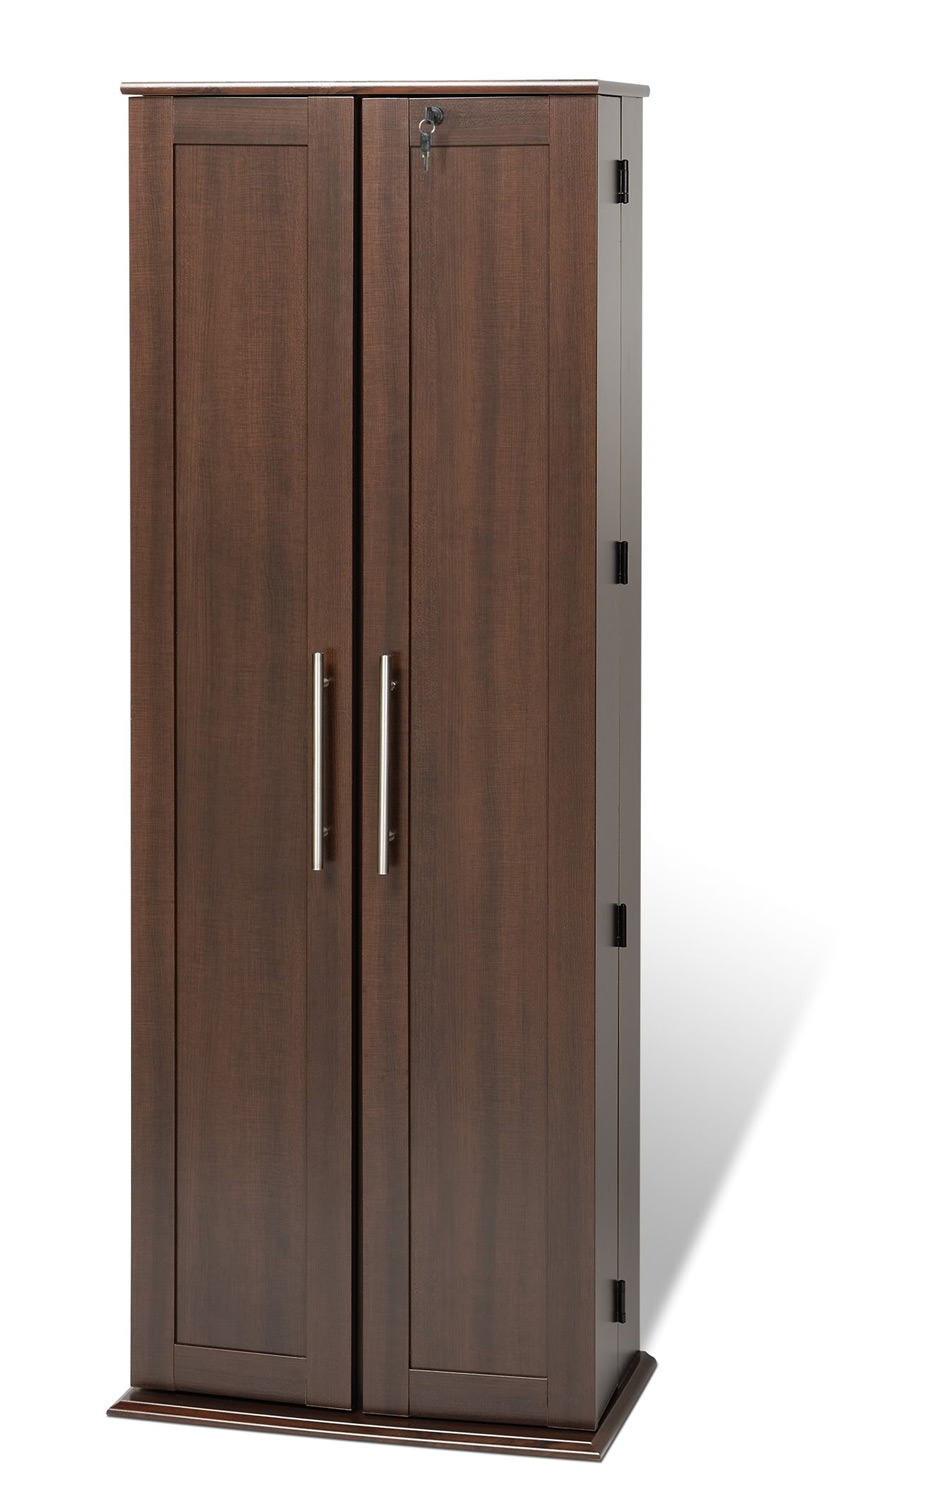 Prepac Grande Locking Media Storage Cabinet with Shaker Doors - Espresso